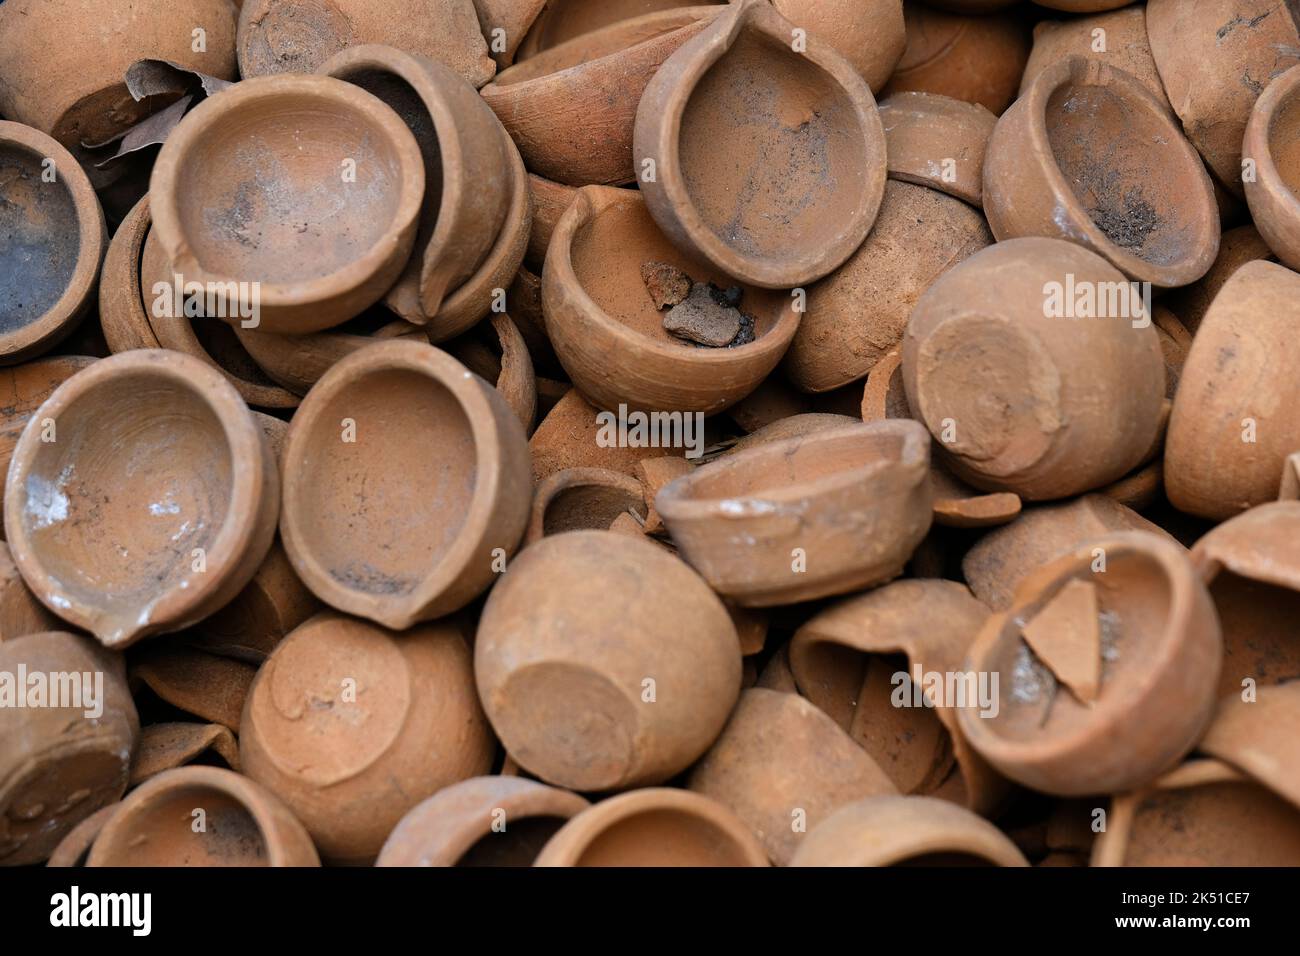 diya or clay lamp at market during Diwali festival in India. Stock Photo